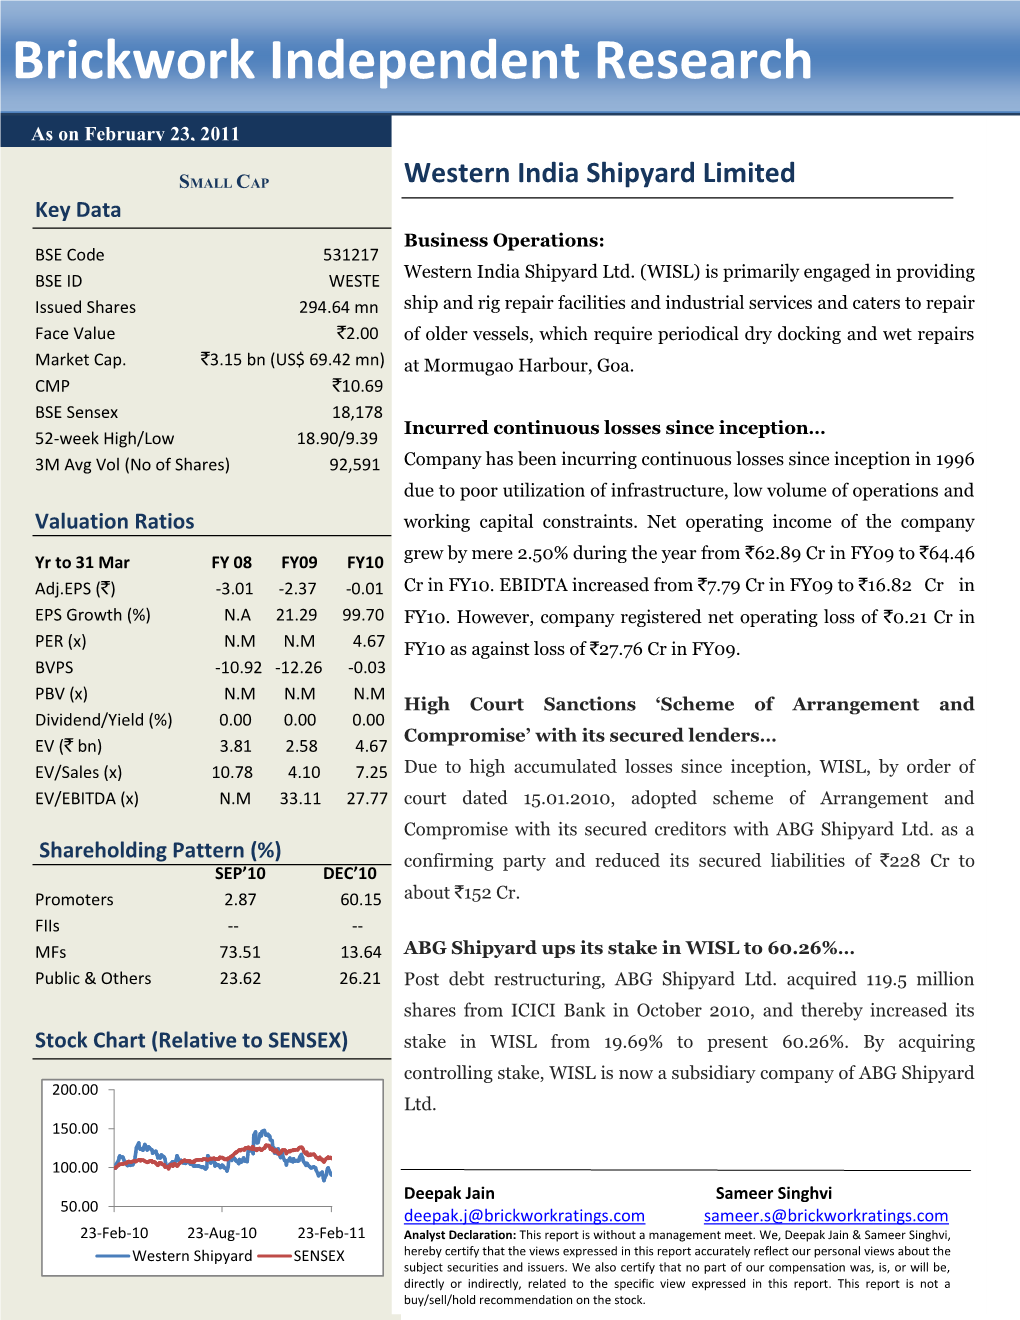 Western India Shipyard Limited Key Data Business Operations: BSE Code 531217 Western India Shipyard Ltd